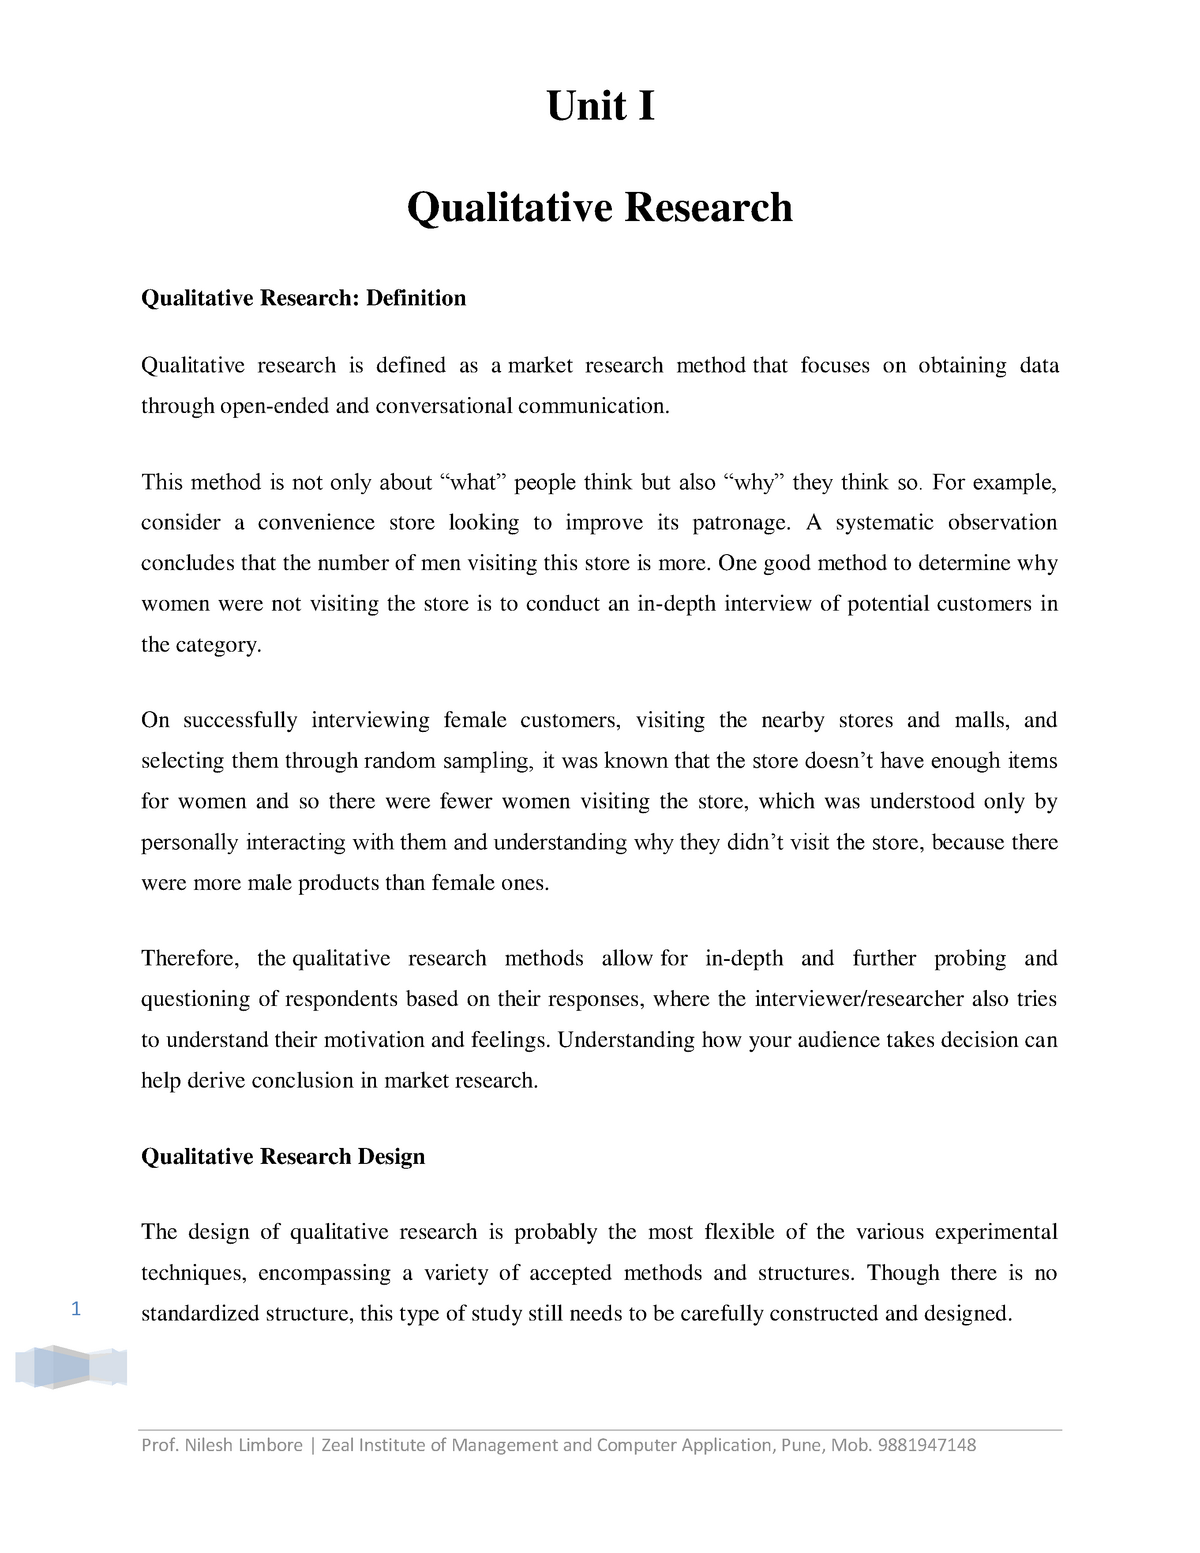 conclusion about qualitative research